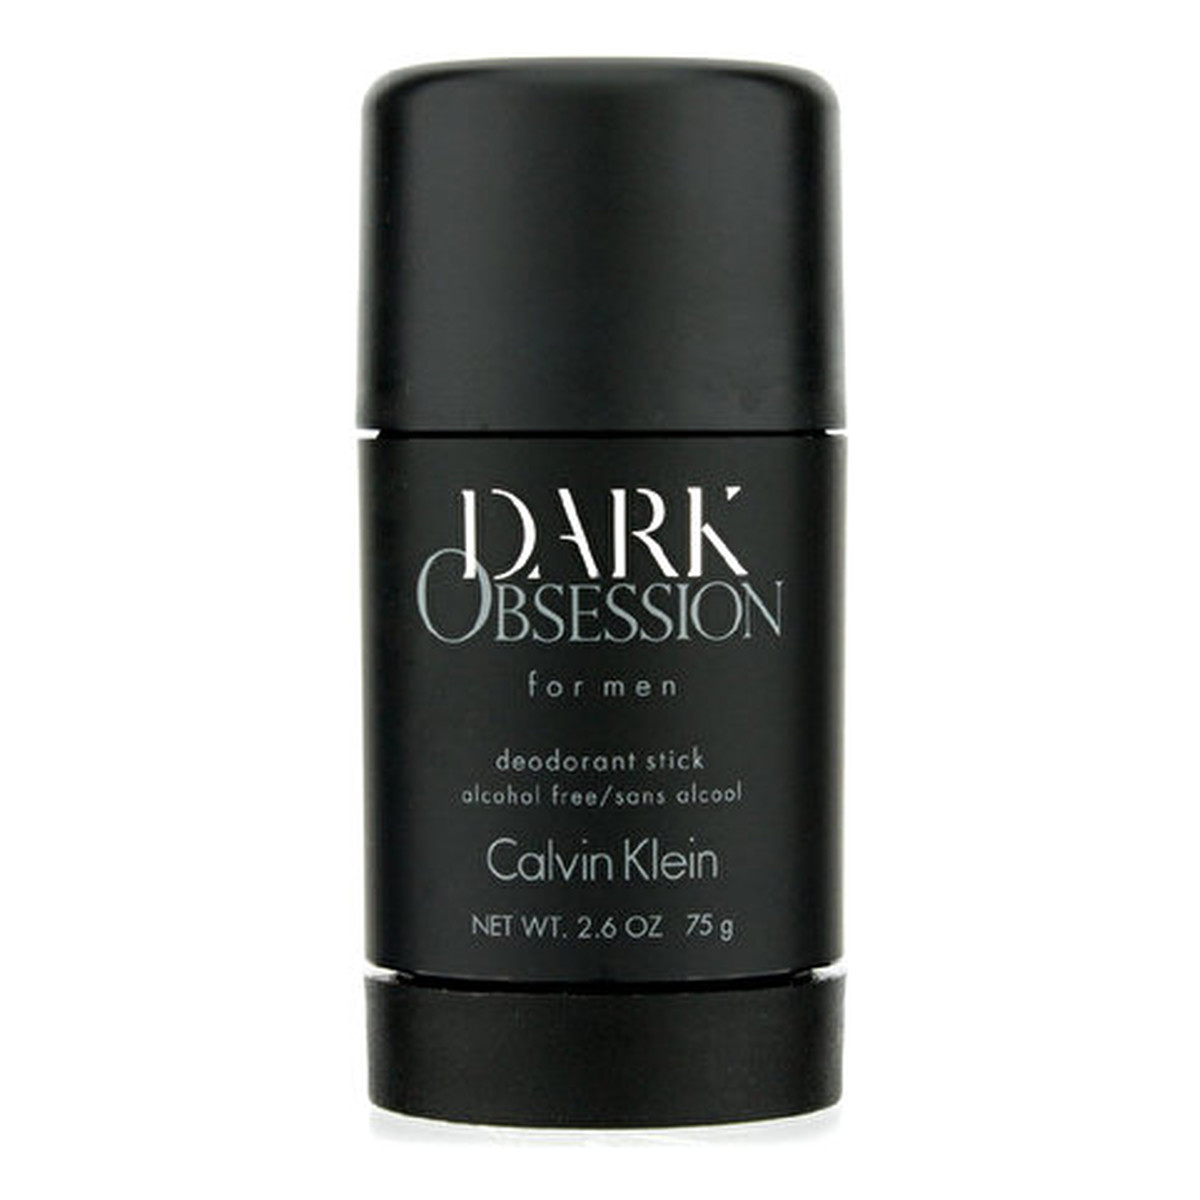 Calvin Klein Dark Obsession for Men Dezodorant sztyft 75g